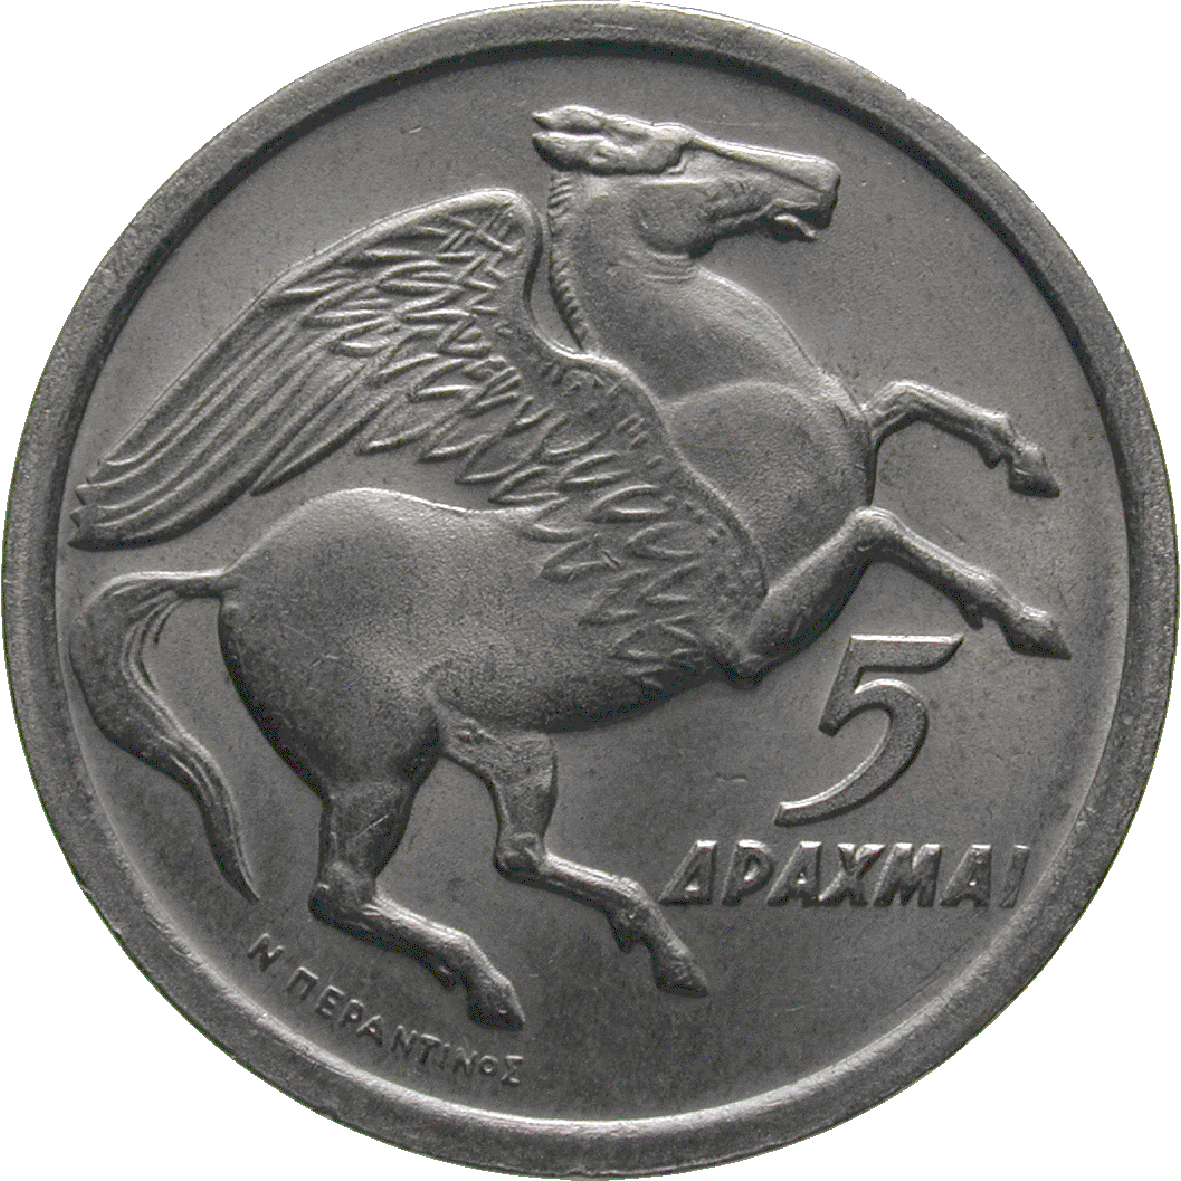 Republic of Greece, 5 Drachmai 1973 (reverse)